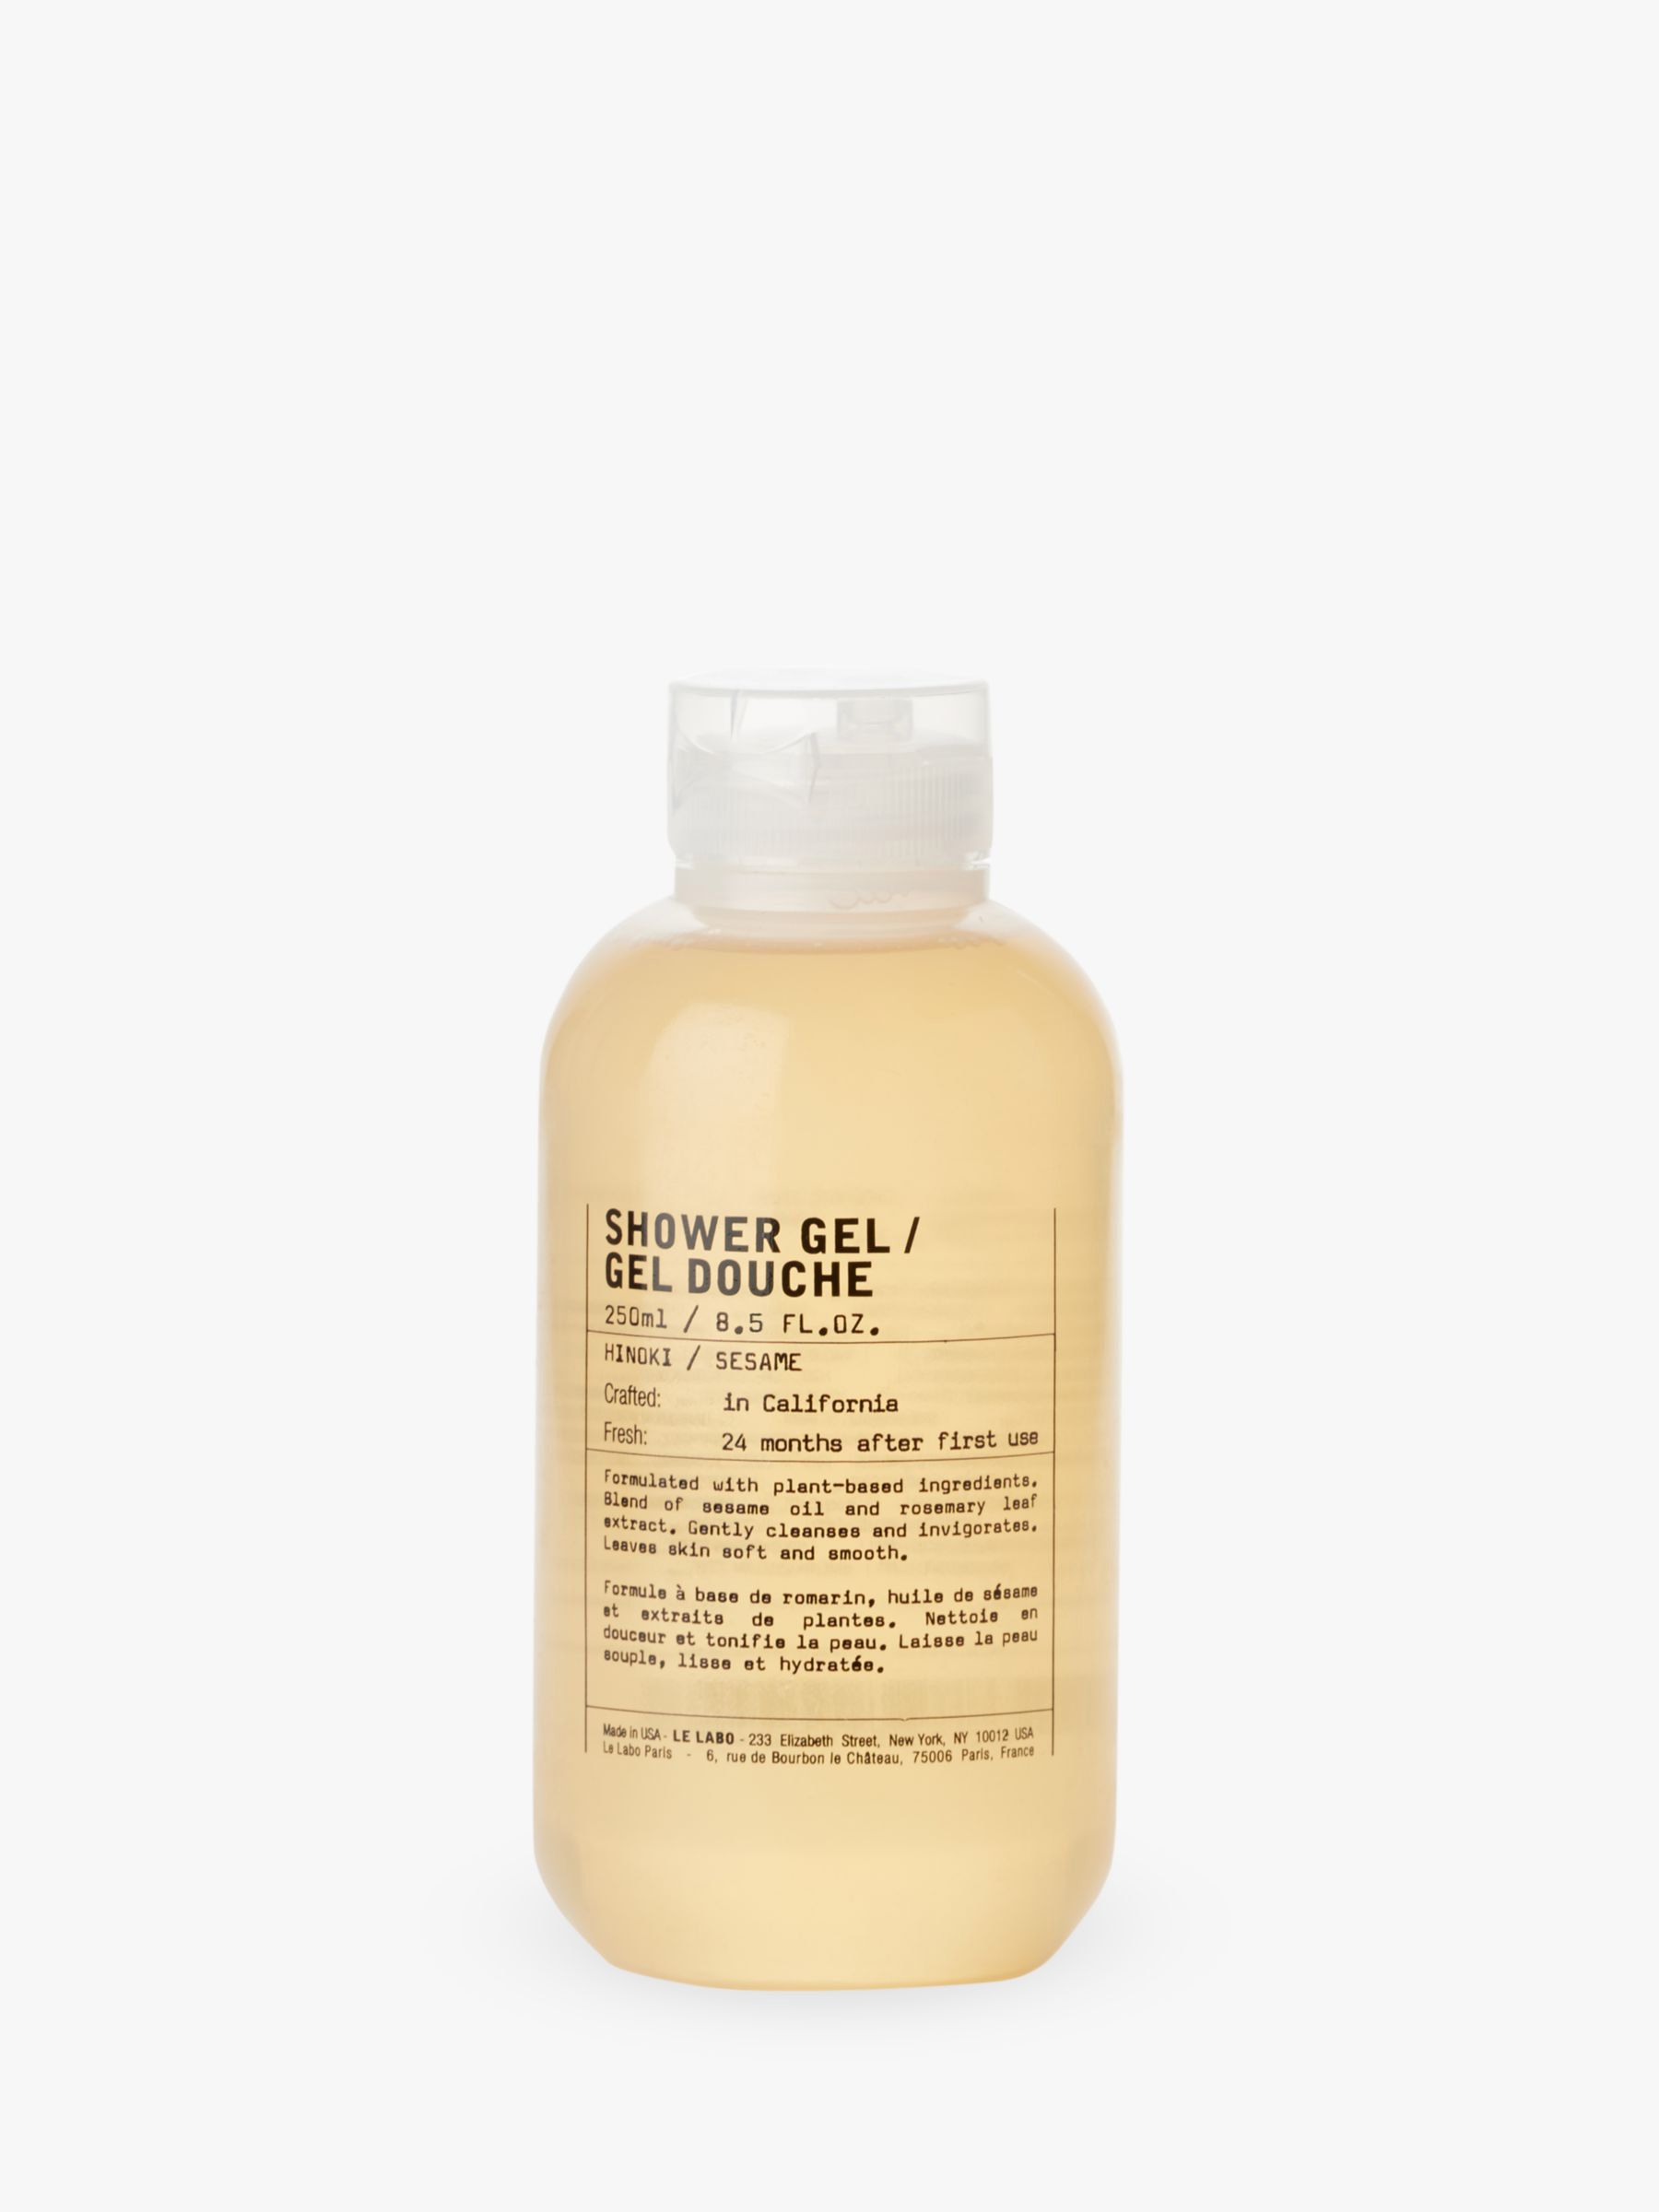 Bottle of Hinoki shower gel on a white background